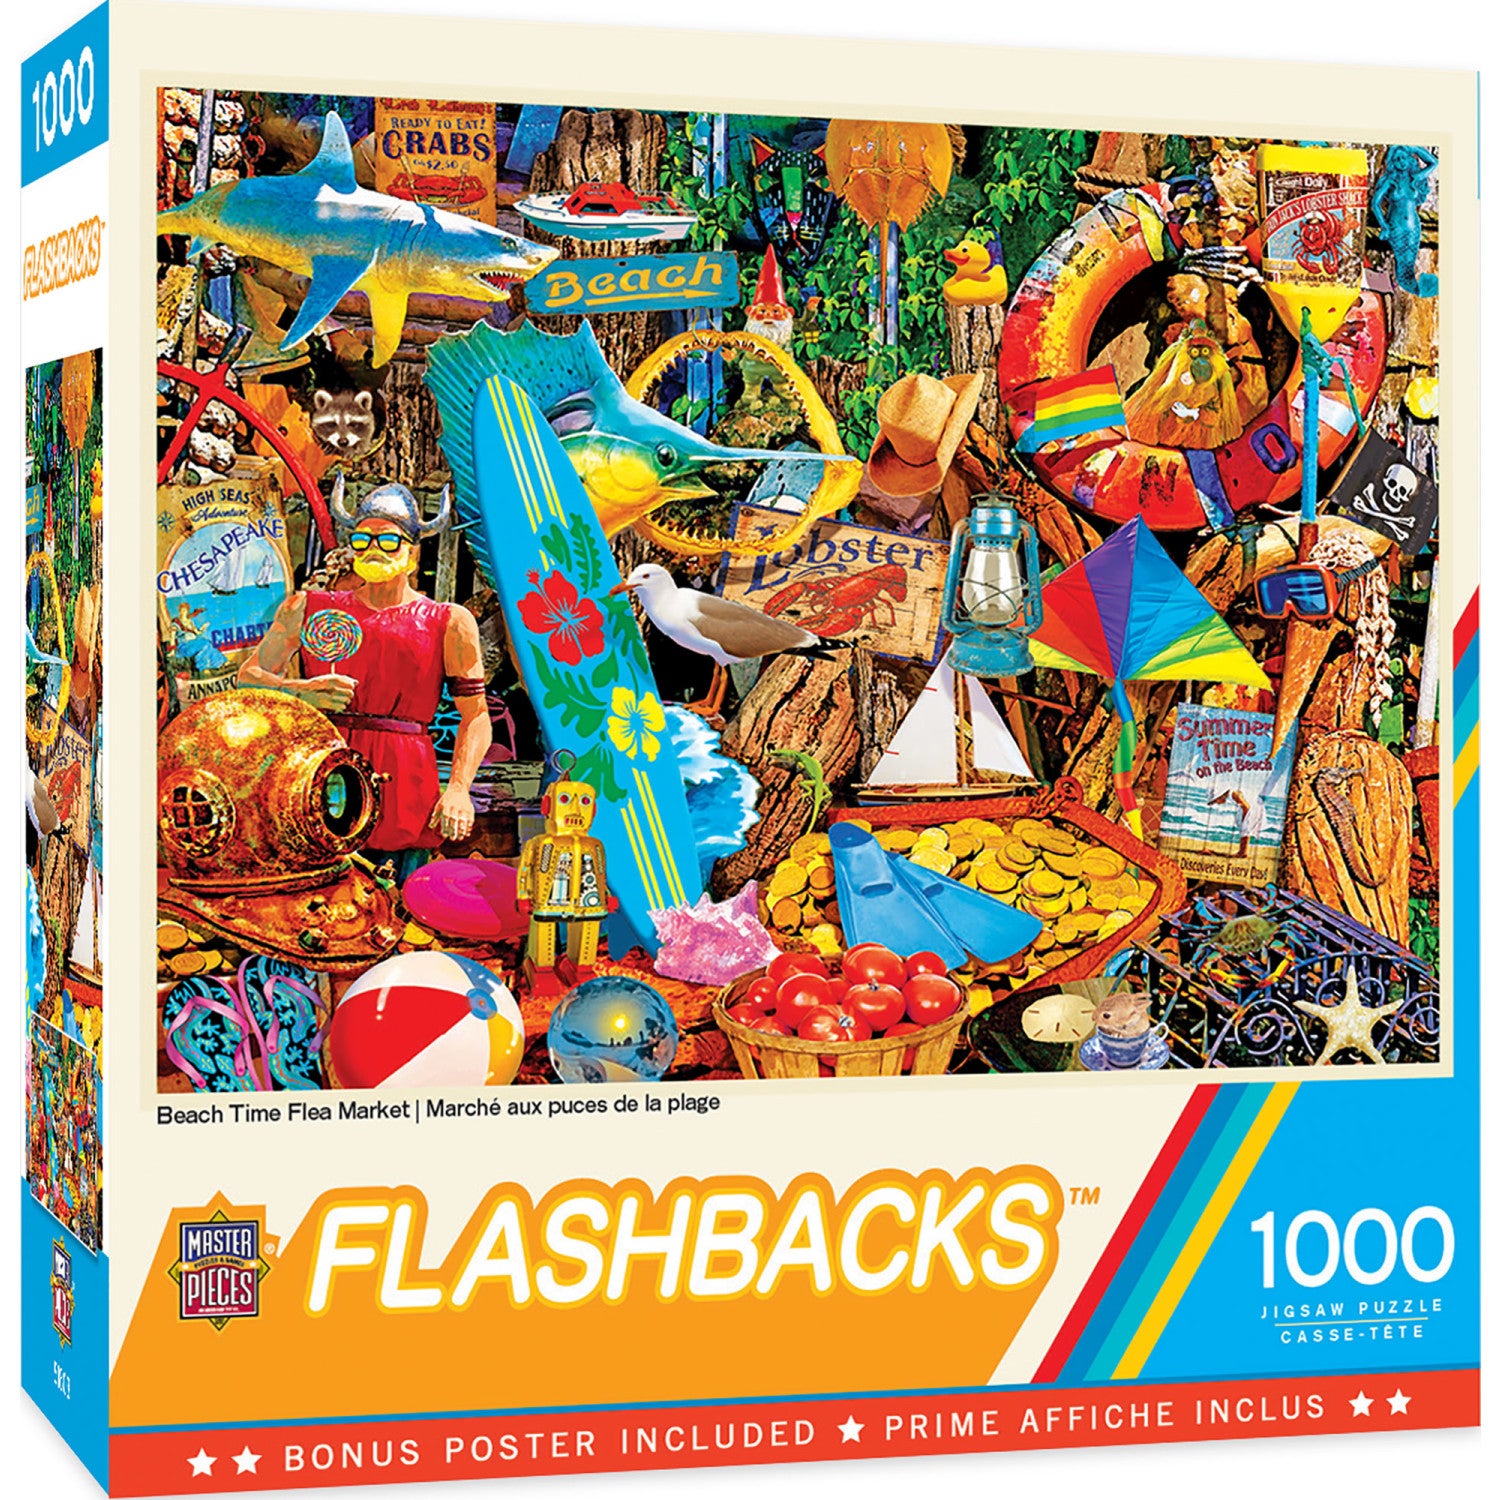 Flashbacks - Beach Time Flea Market 1000 Piece Jigsaw Puzzle